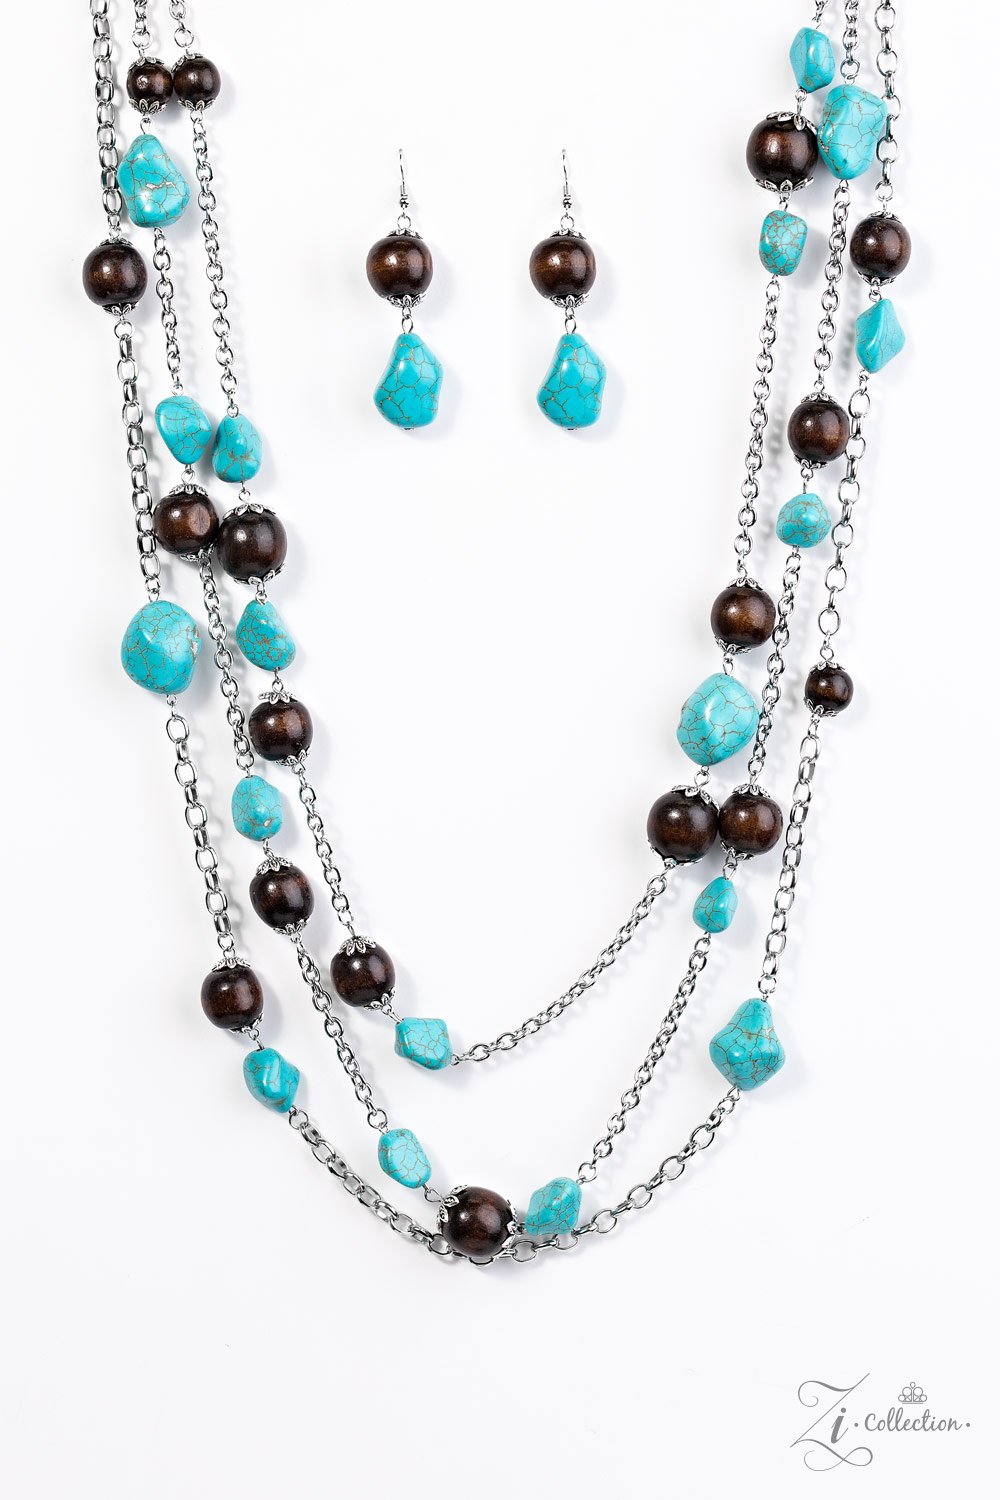 Groundbreaker - Zi Collection necklace - Paparazzi necklace